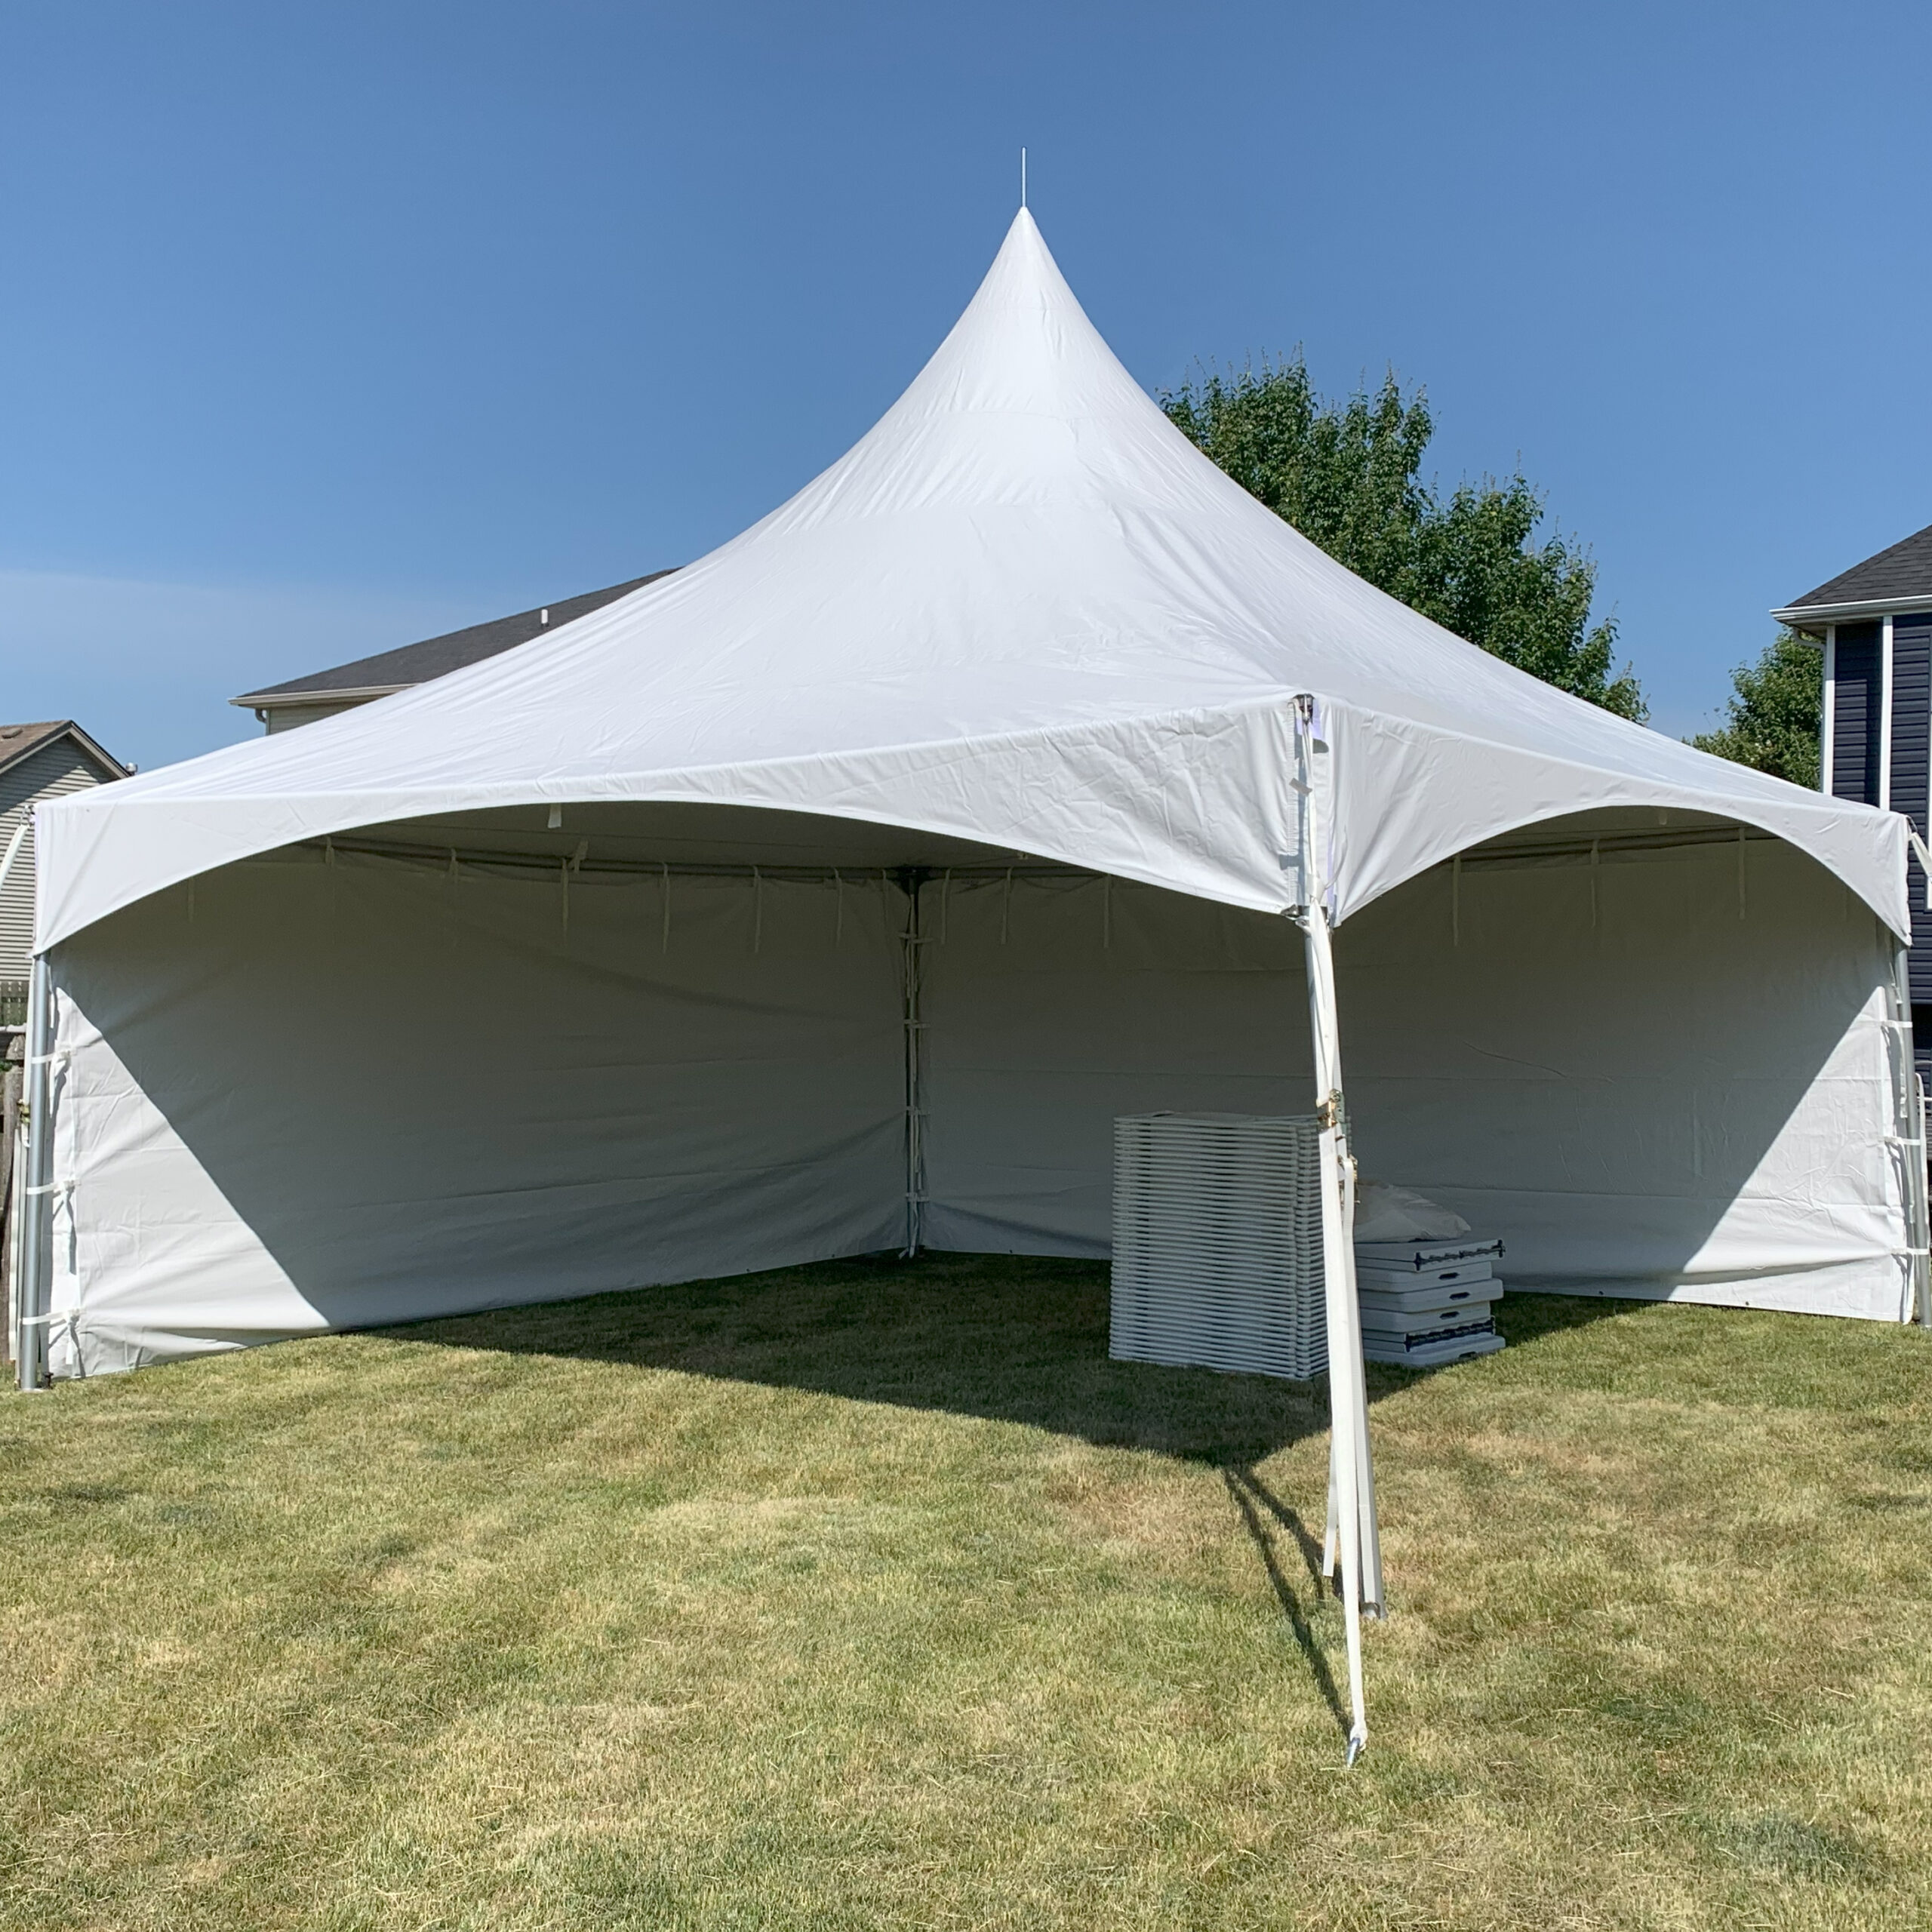 solid tent sidewalls